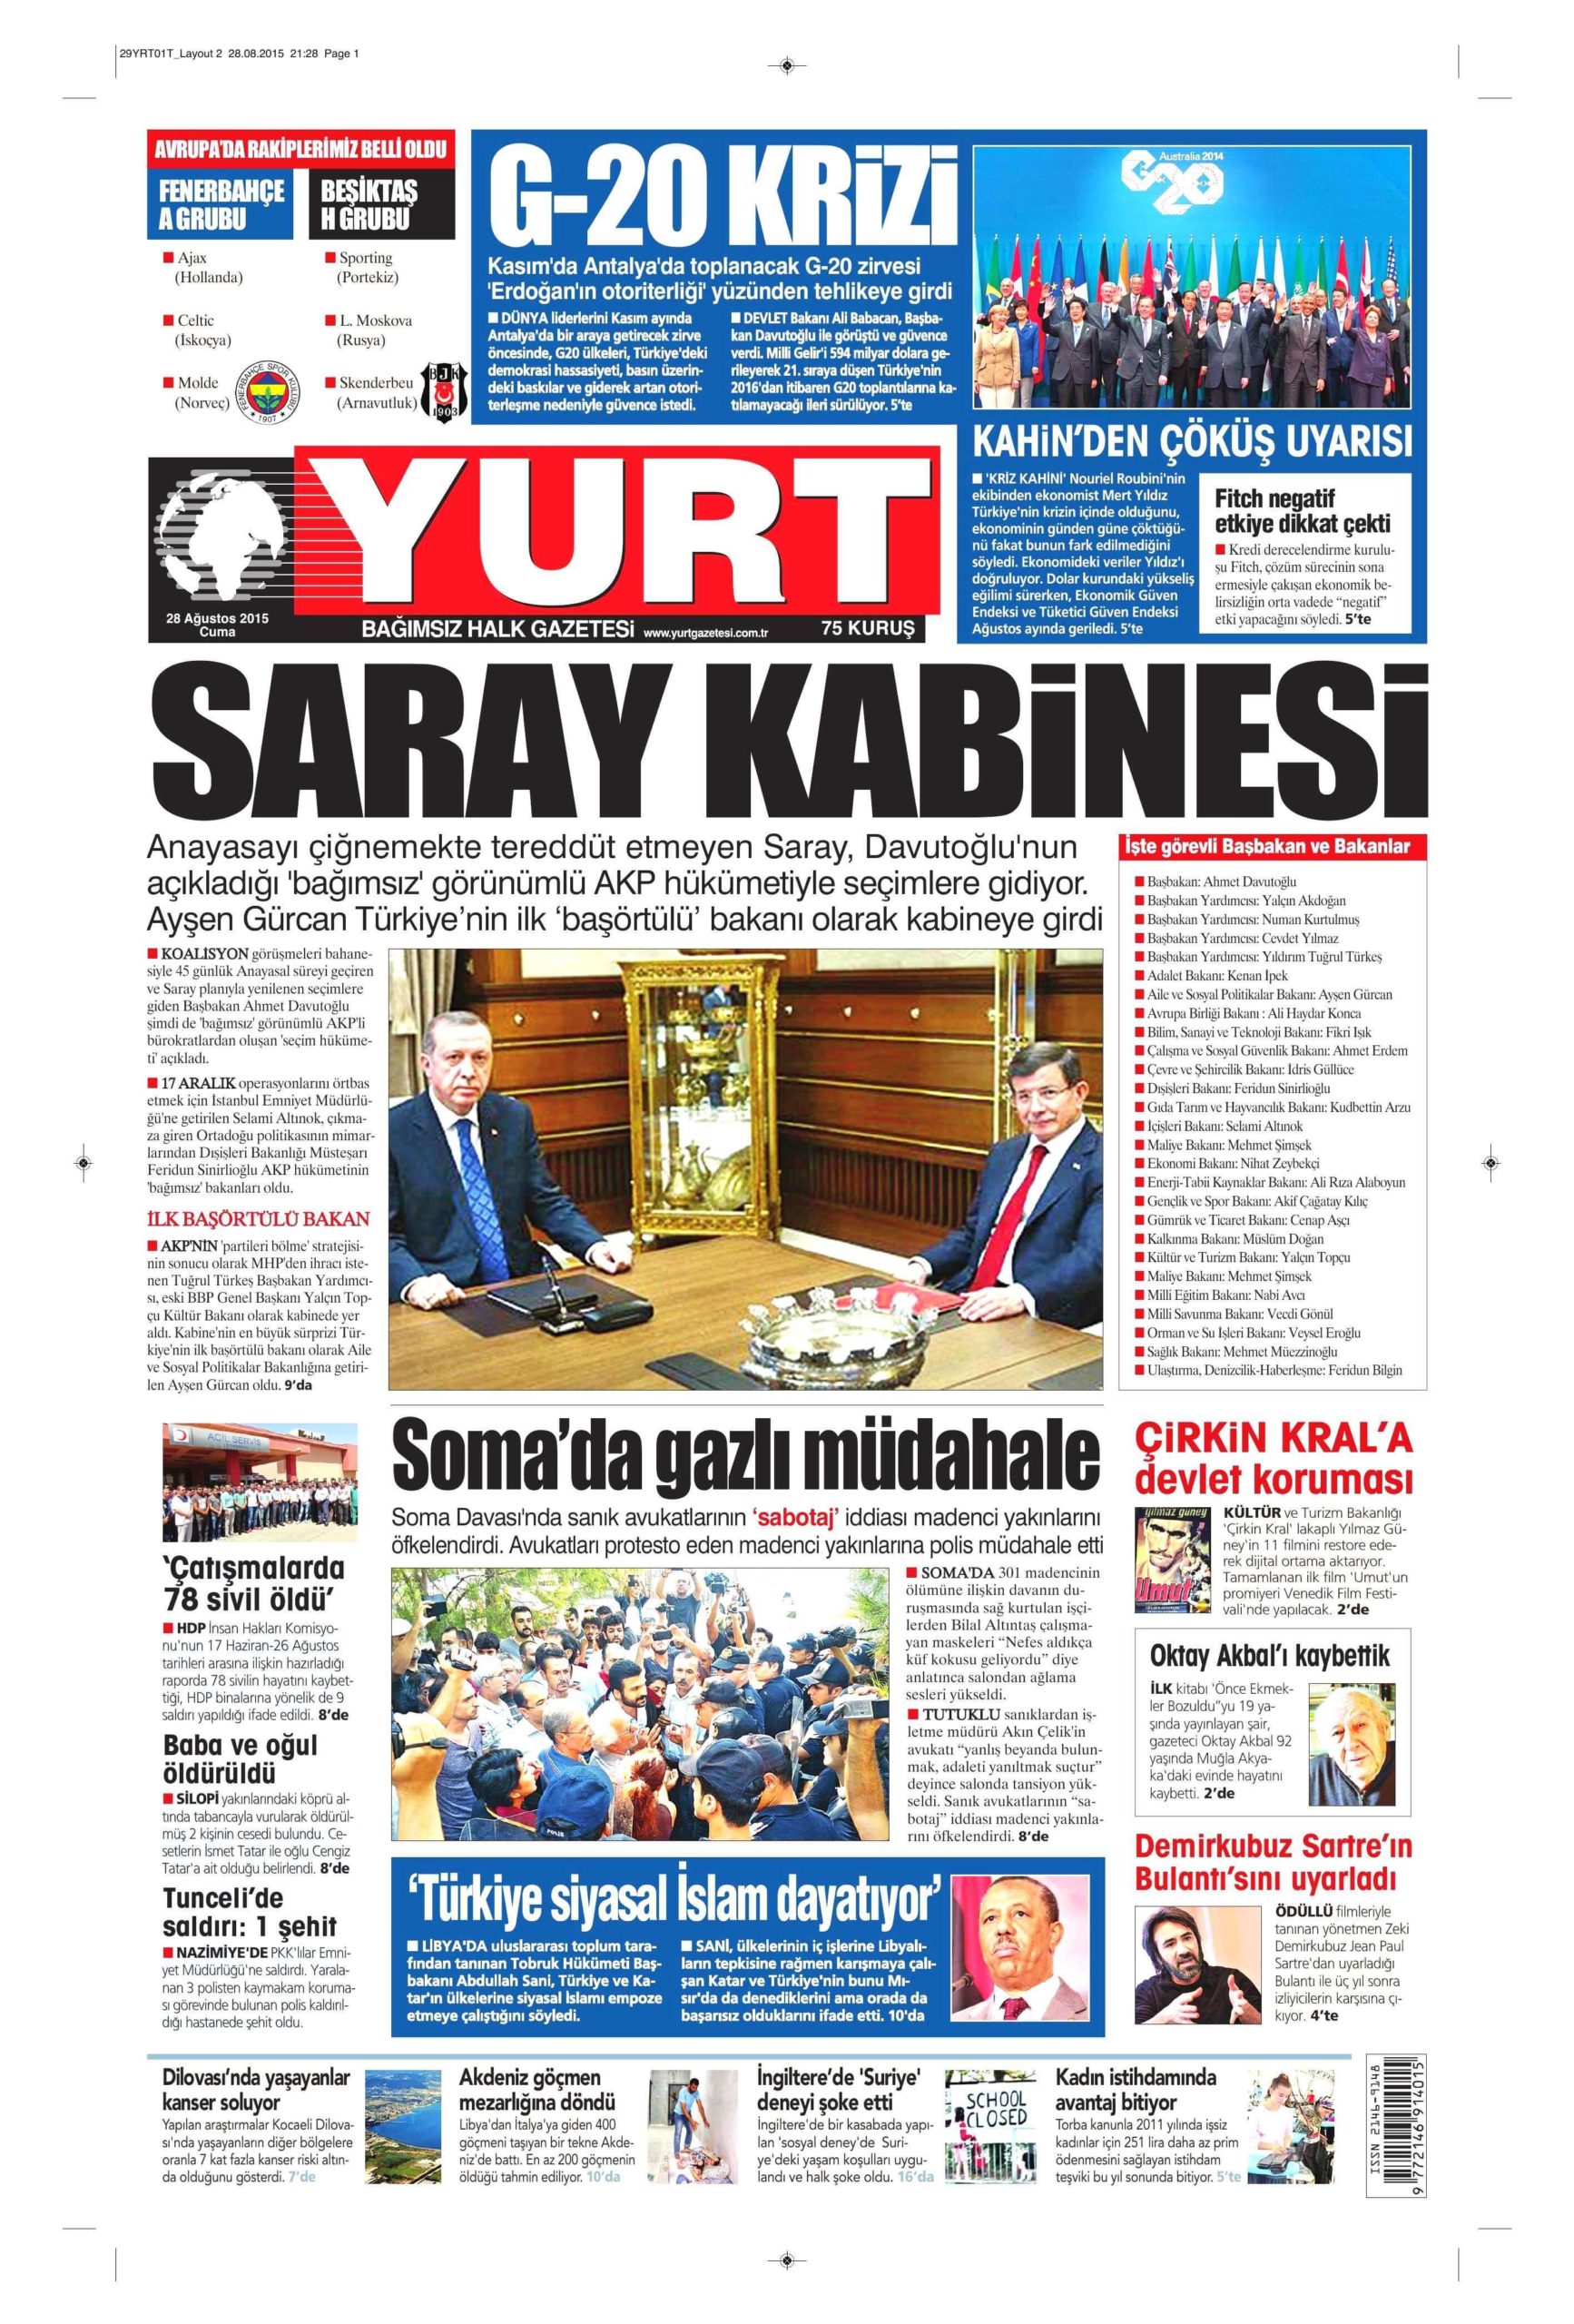 Turkish Newspapers 35 Yurt Gazetesi scaled